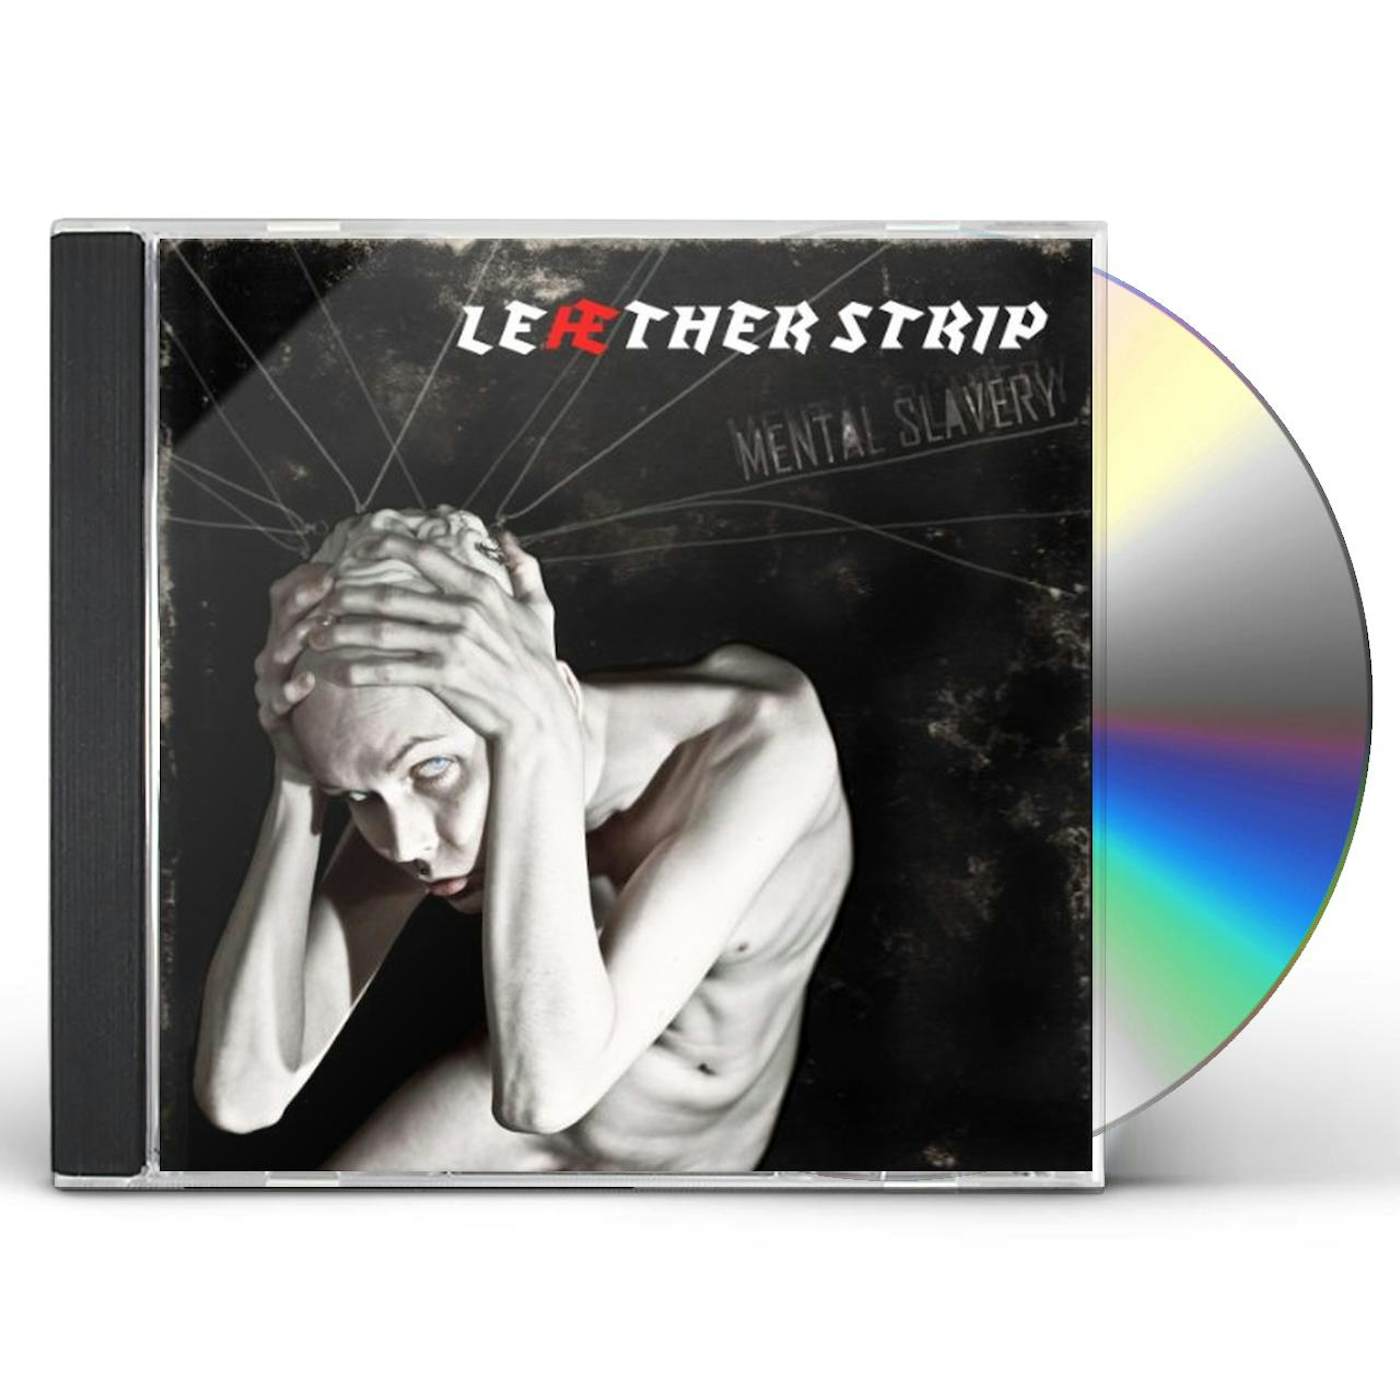 Leaether Strip MENTAL SLAVERY CD